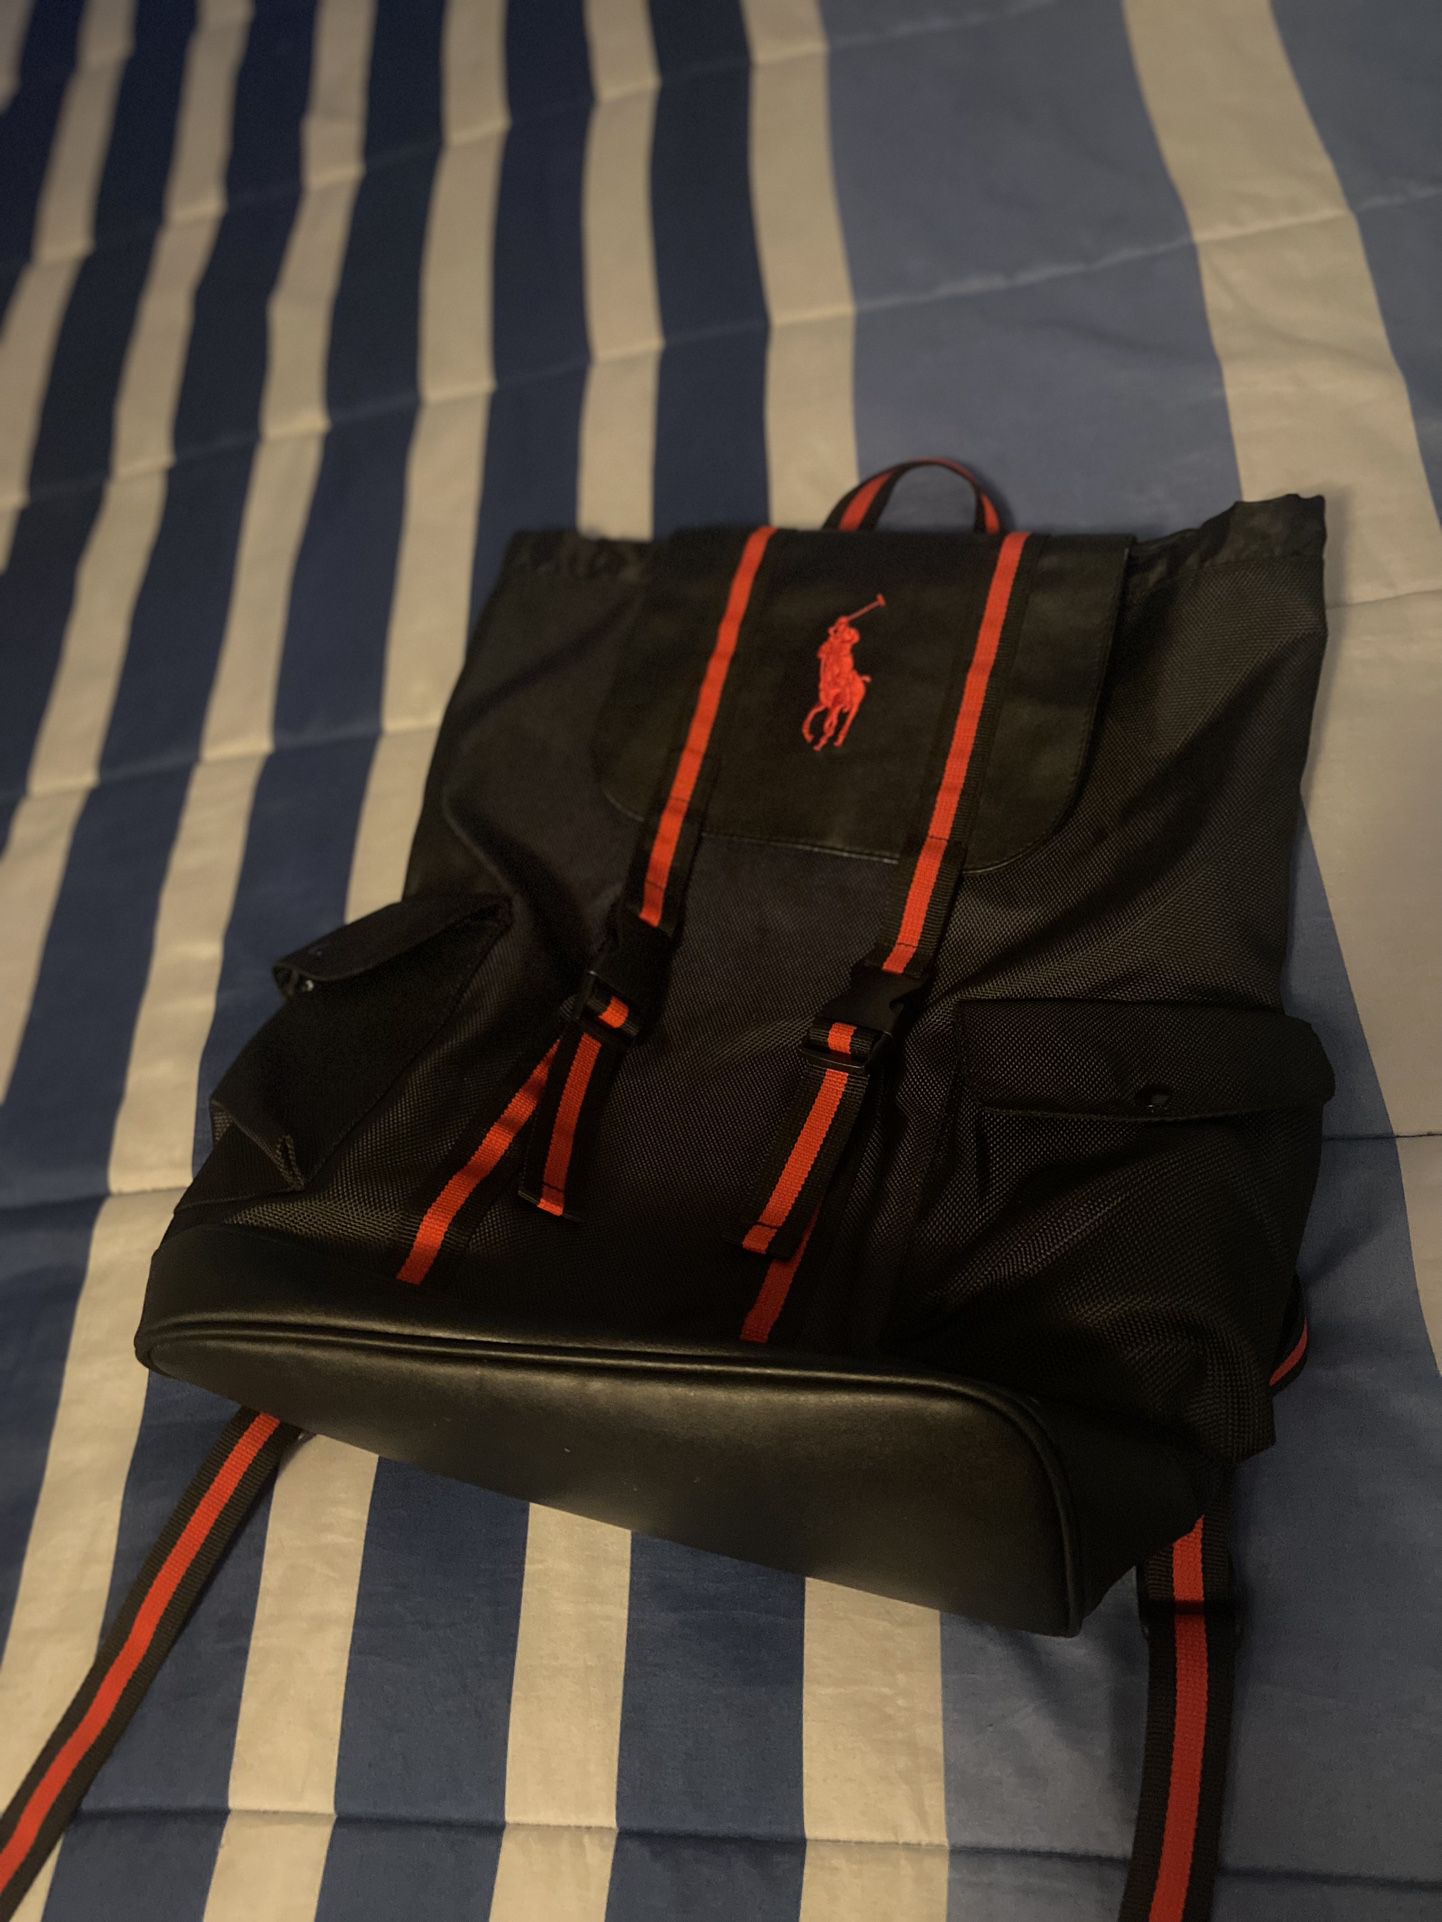 Polo Backpack $40….